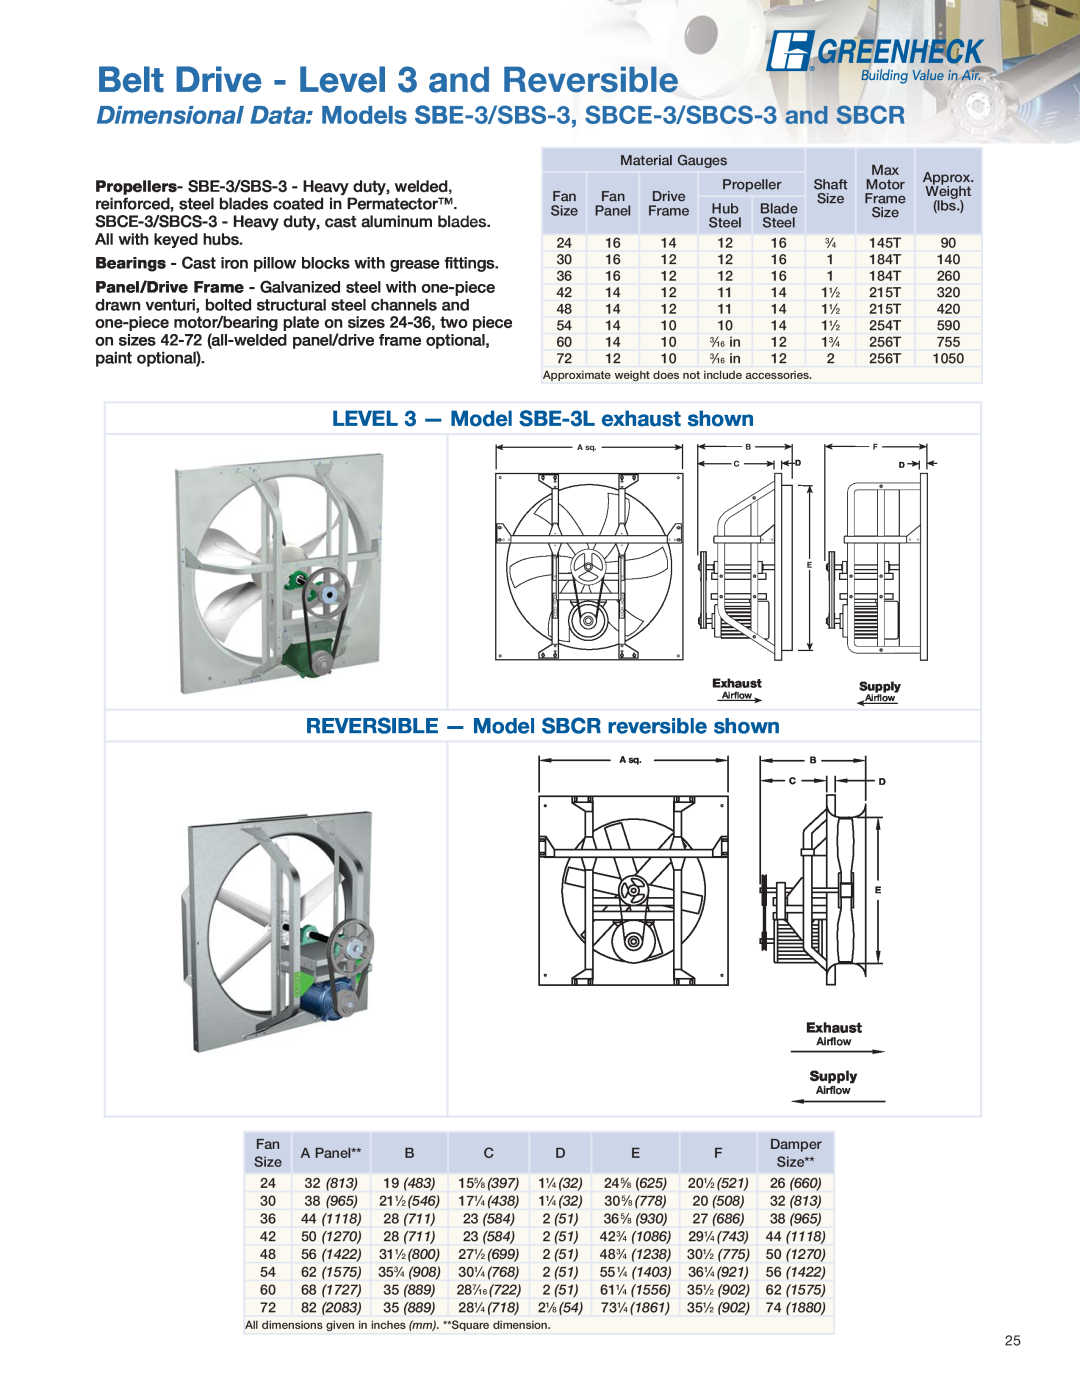 Greenheck Fan SE1, SS1 Belt Drive - Level 3 and Reversible, Dimensional Data Models SBE-3/SBS-3, SBCE-3/SBCS-3 and SBCR 